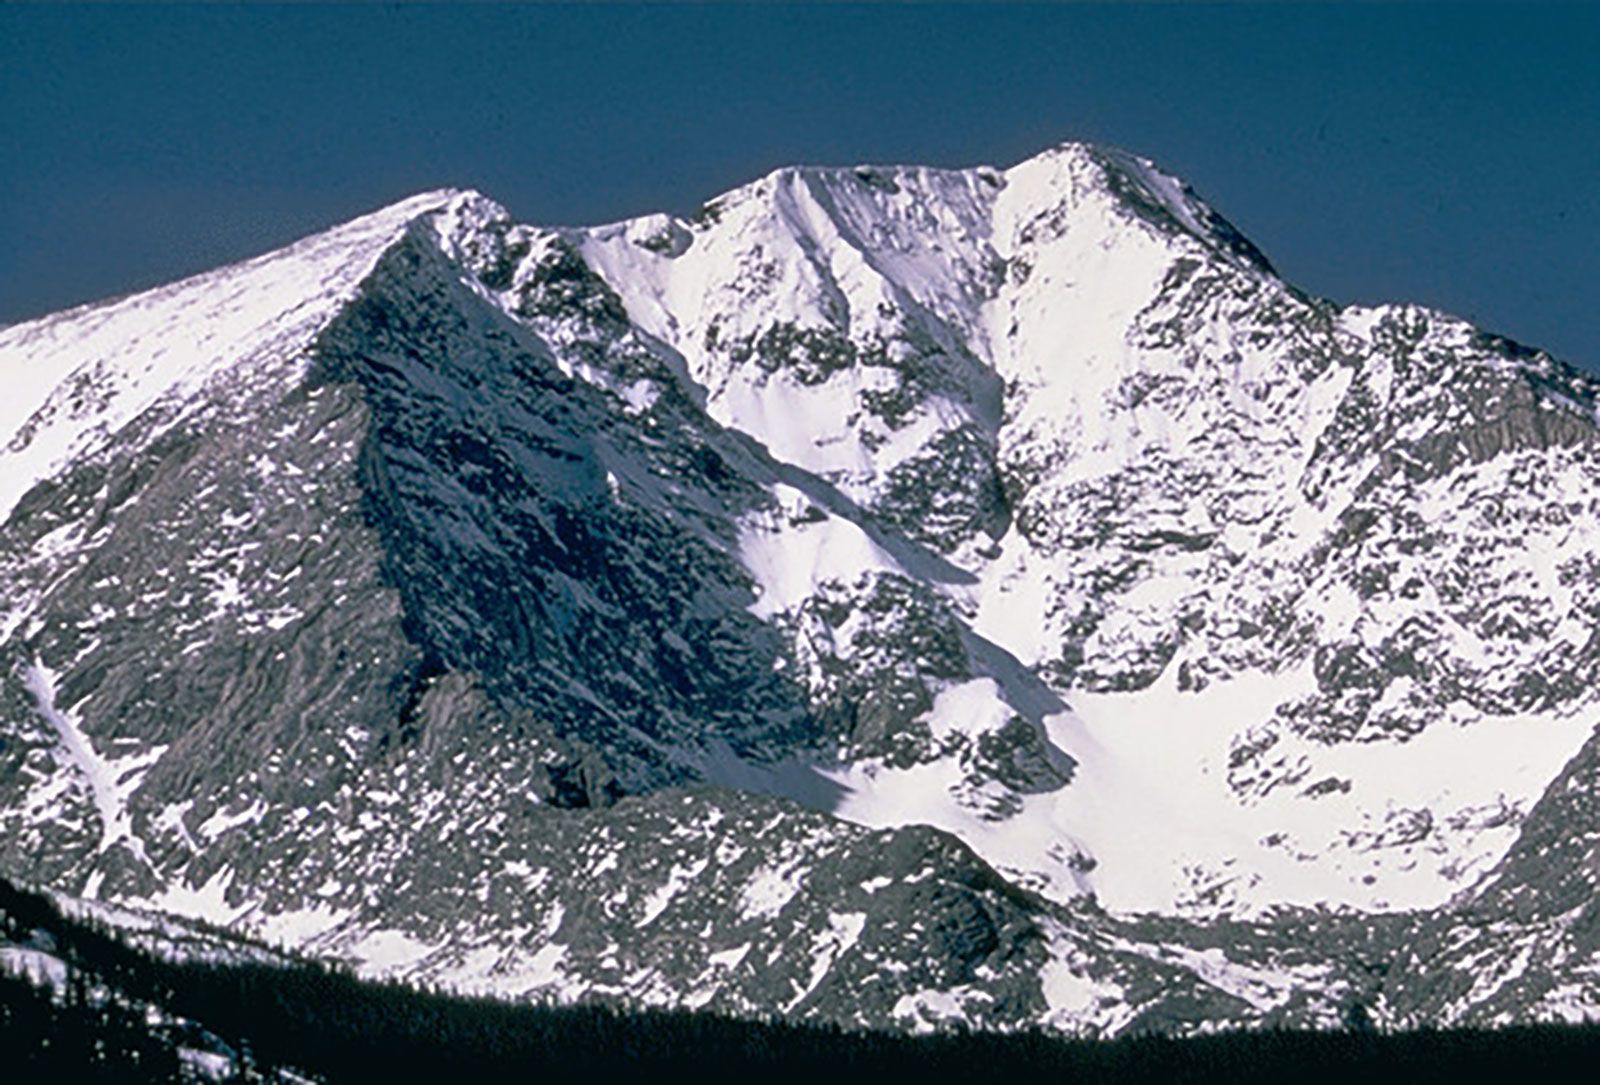 Climbing - Rocky Mountain National Park (U.S. National Park Service)